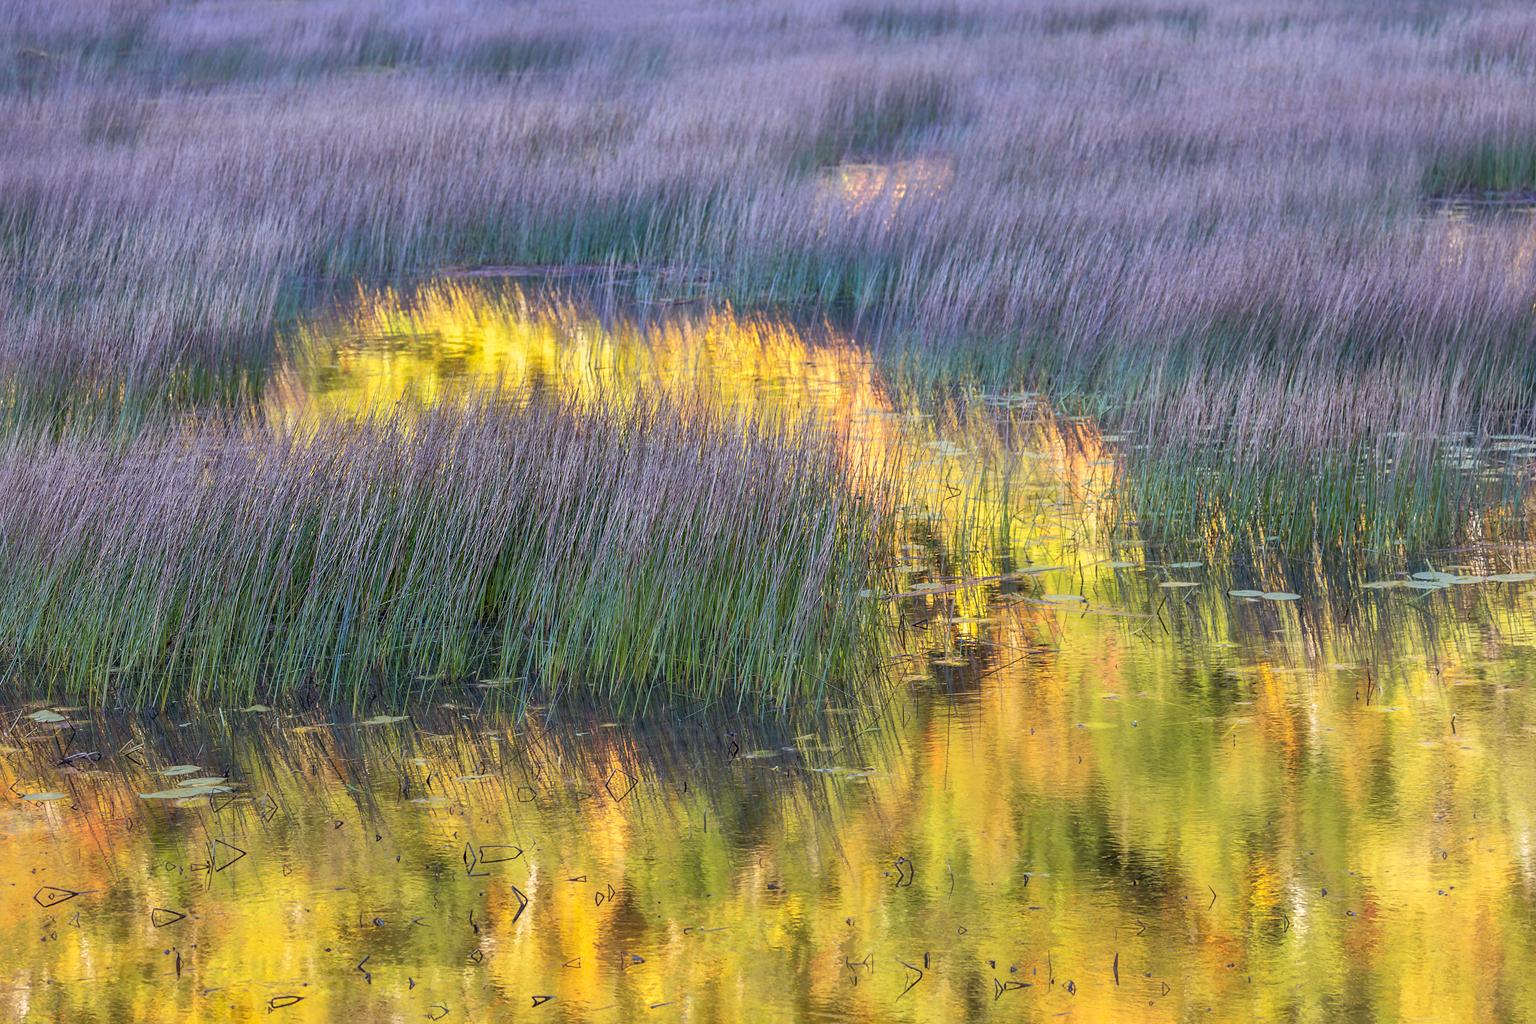 "Pond", Color Nature Photography, Landscape, Impressionist, Yellow, Purple